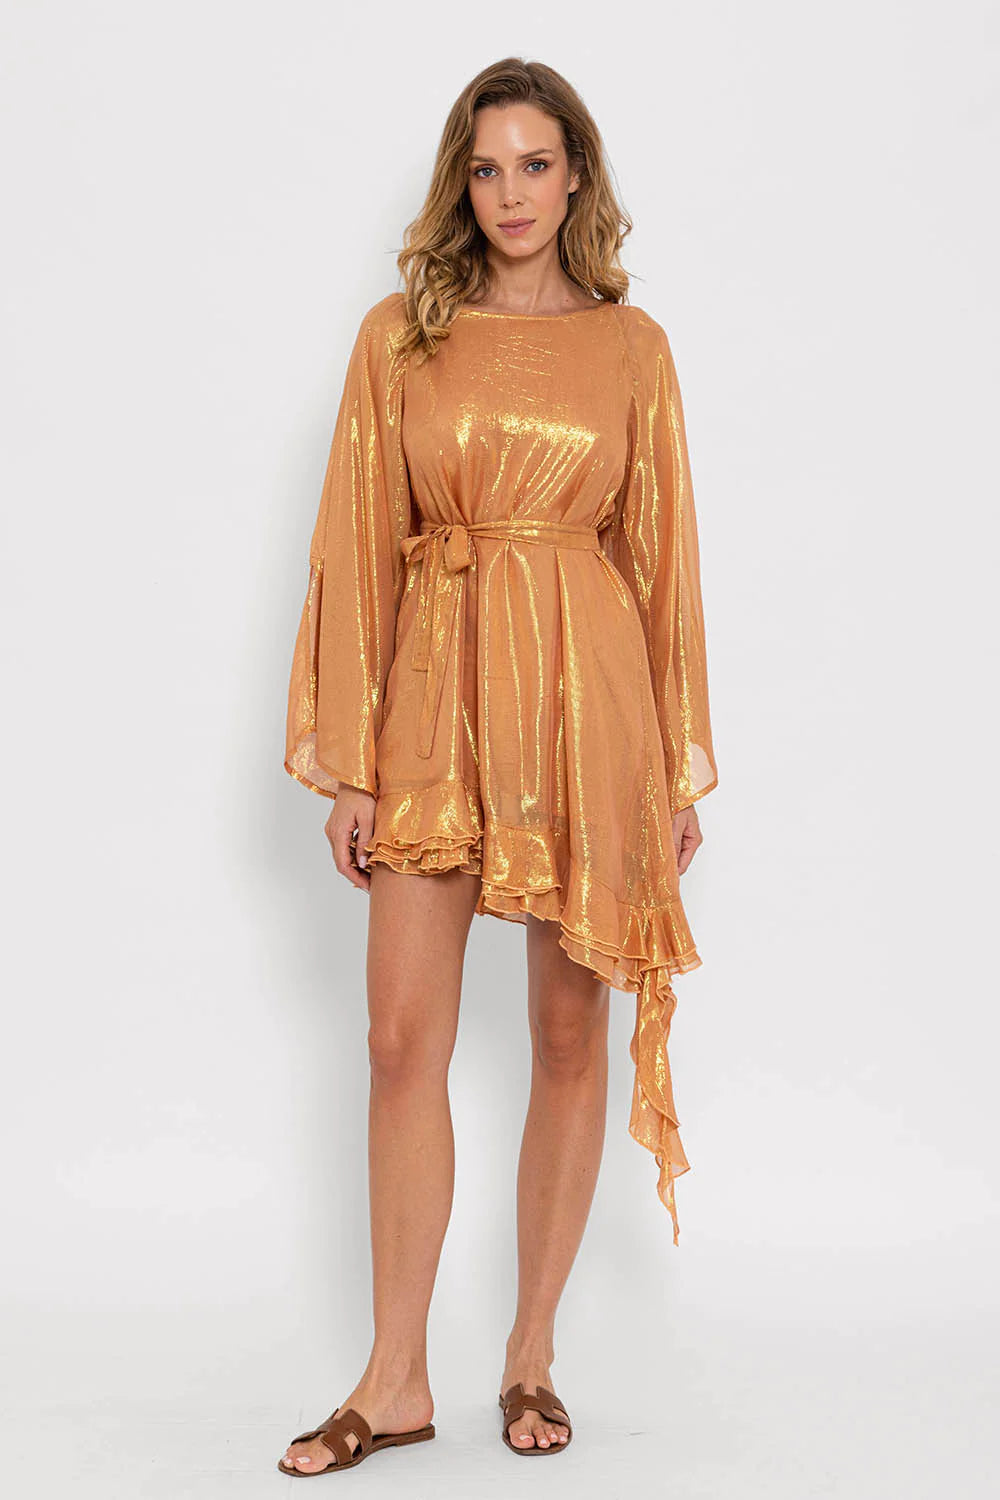 Sundress Indy Dress in Golden Sand